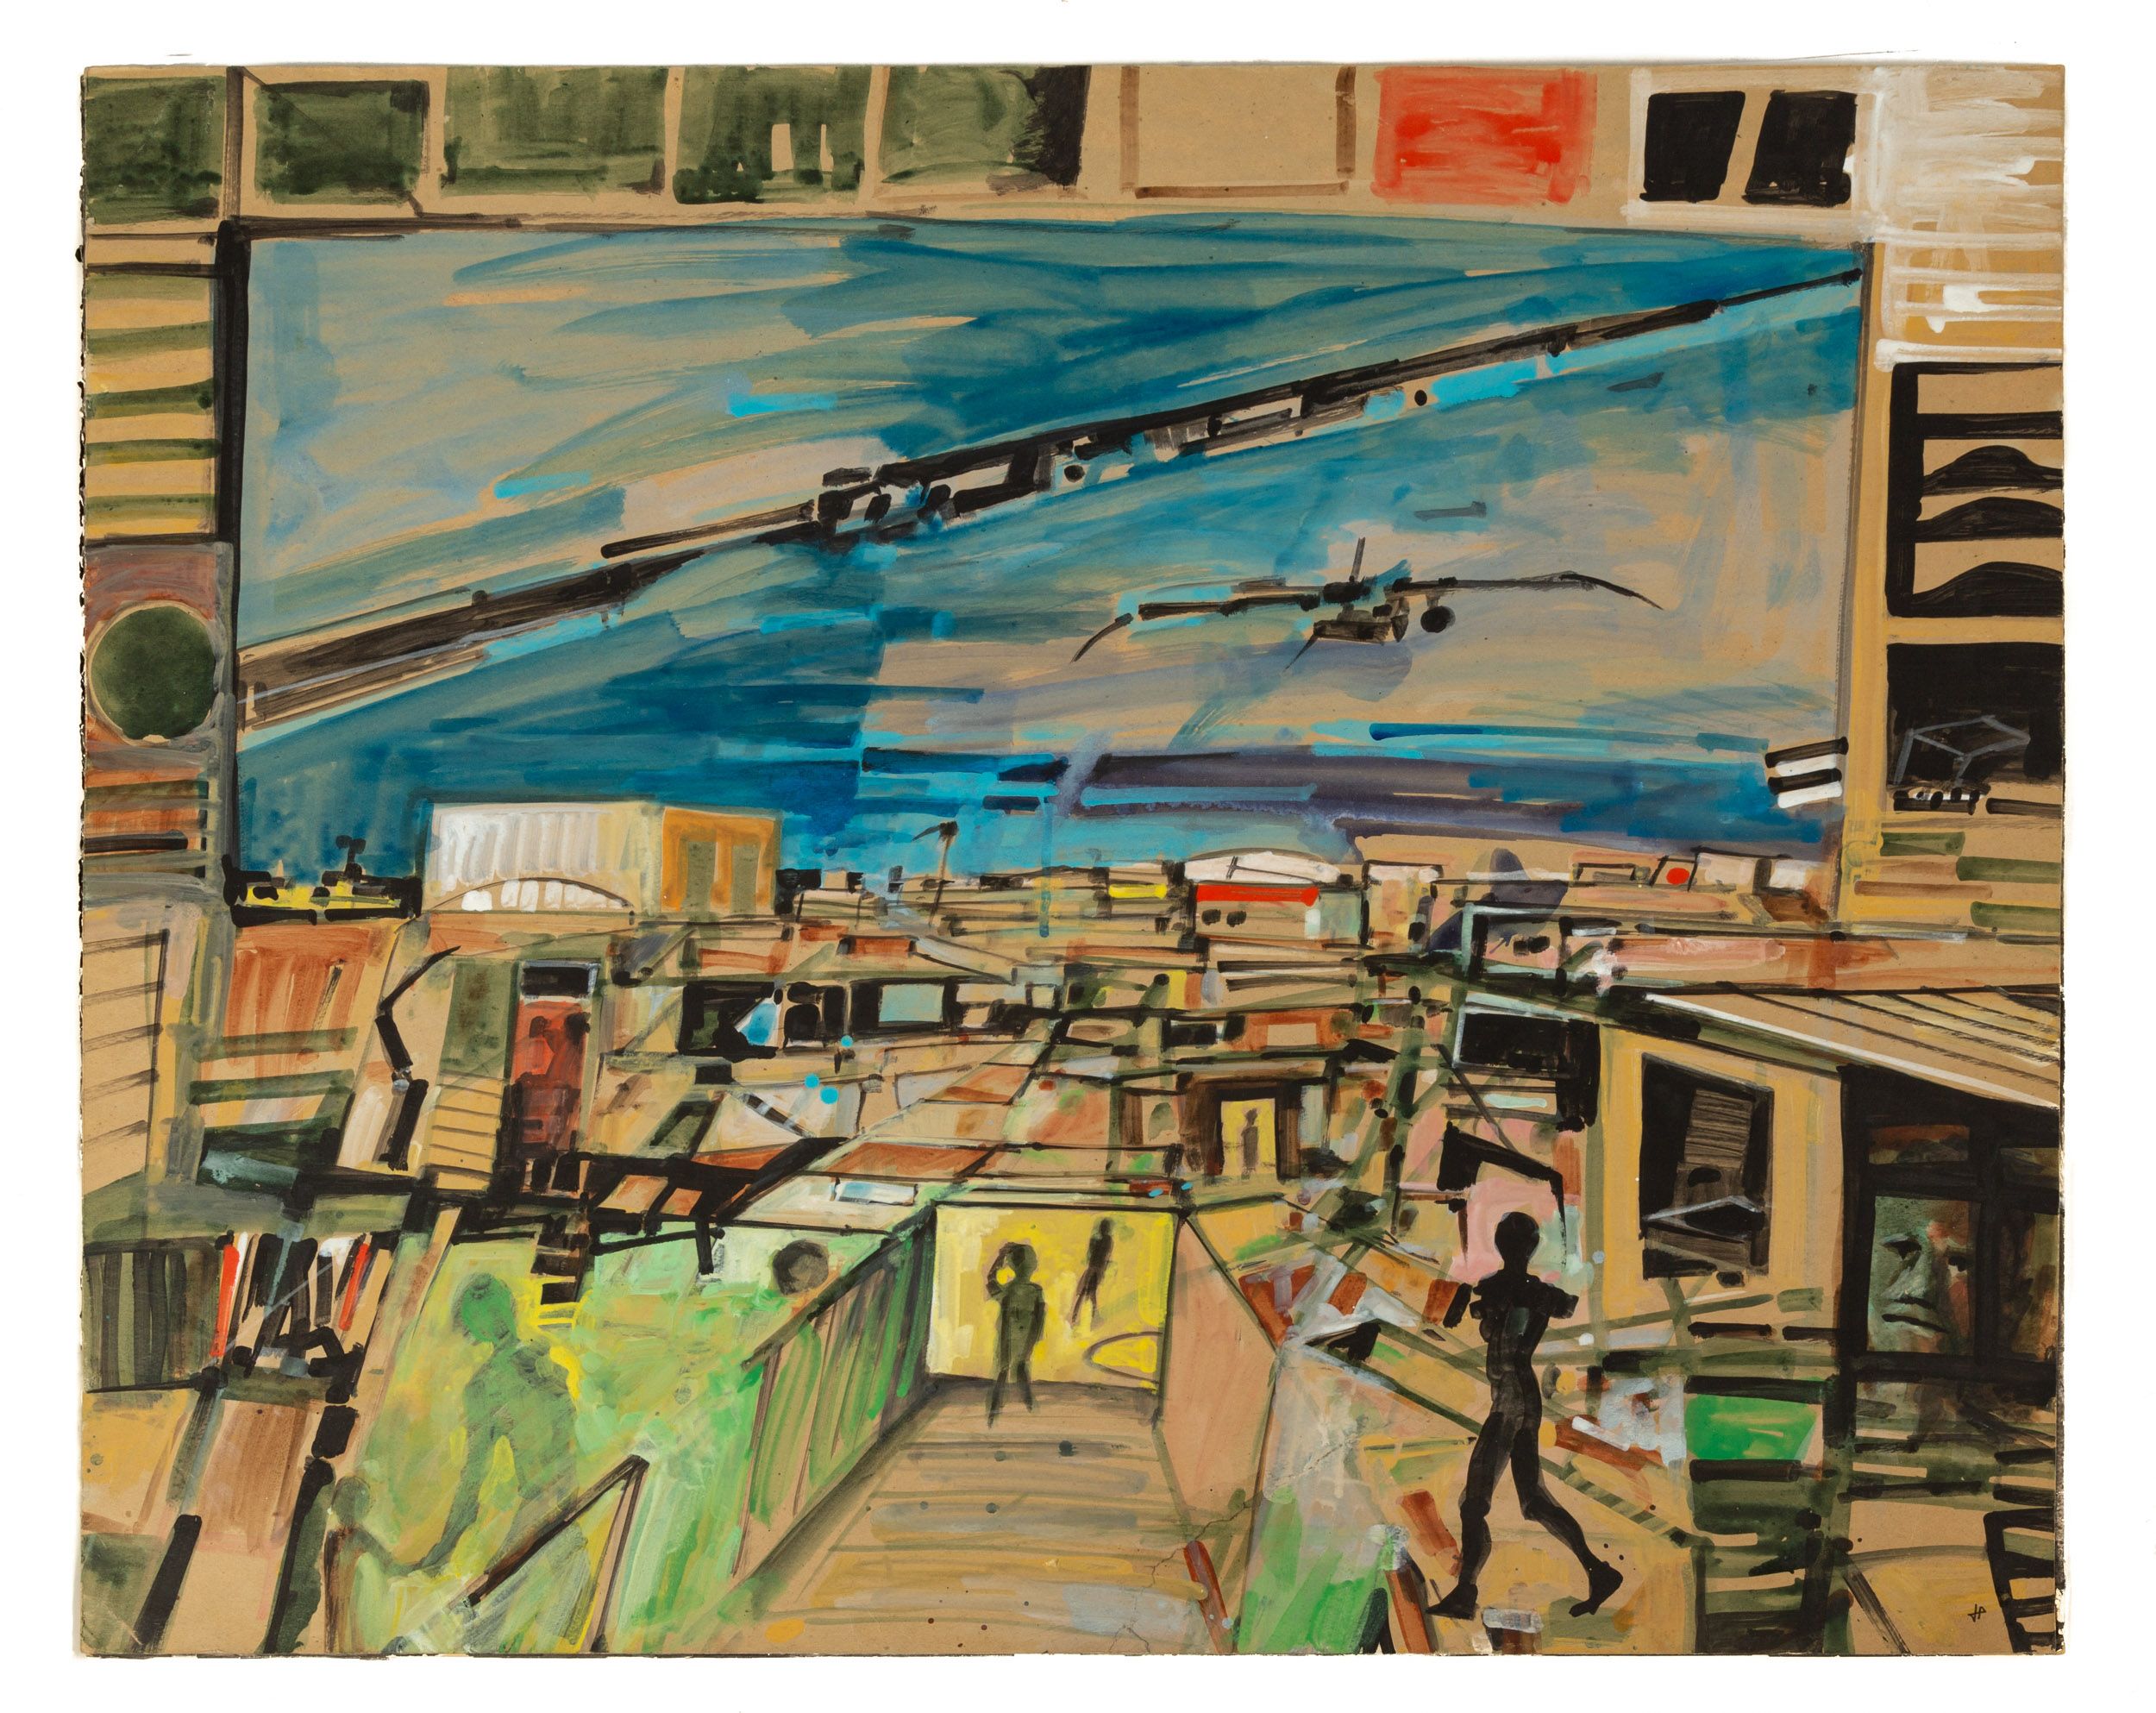 John Hultberg (American, 1922 - 2005) "Too Near the Airport"